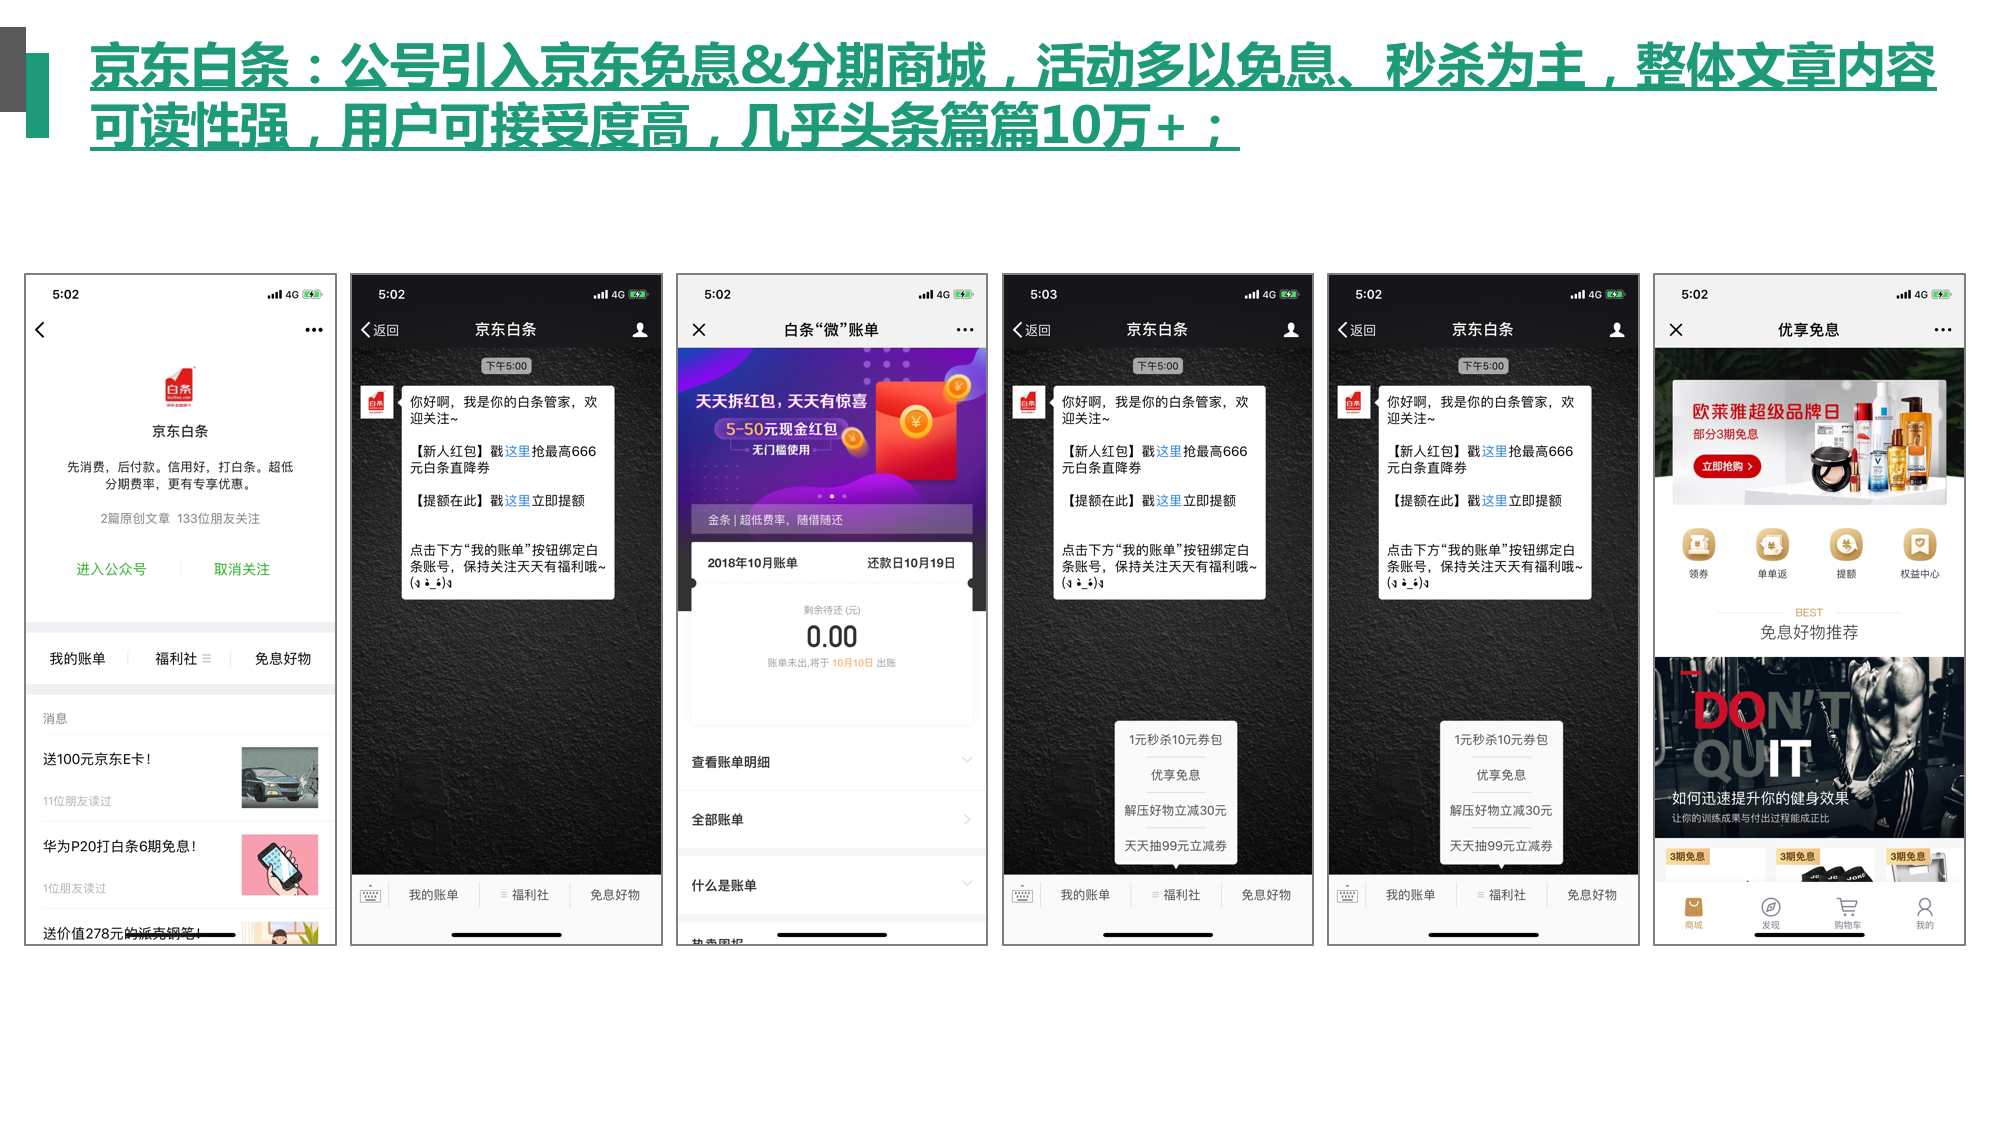 96weixin,新媒体运营,何杰,案例分析,新媒体营销,小程序